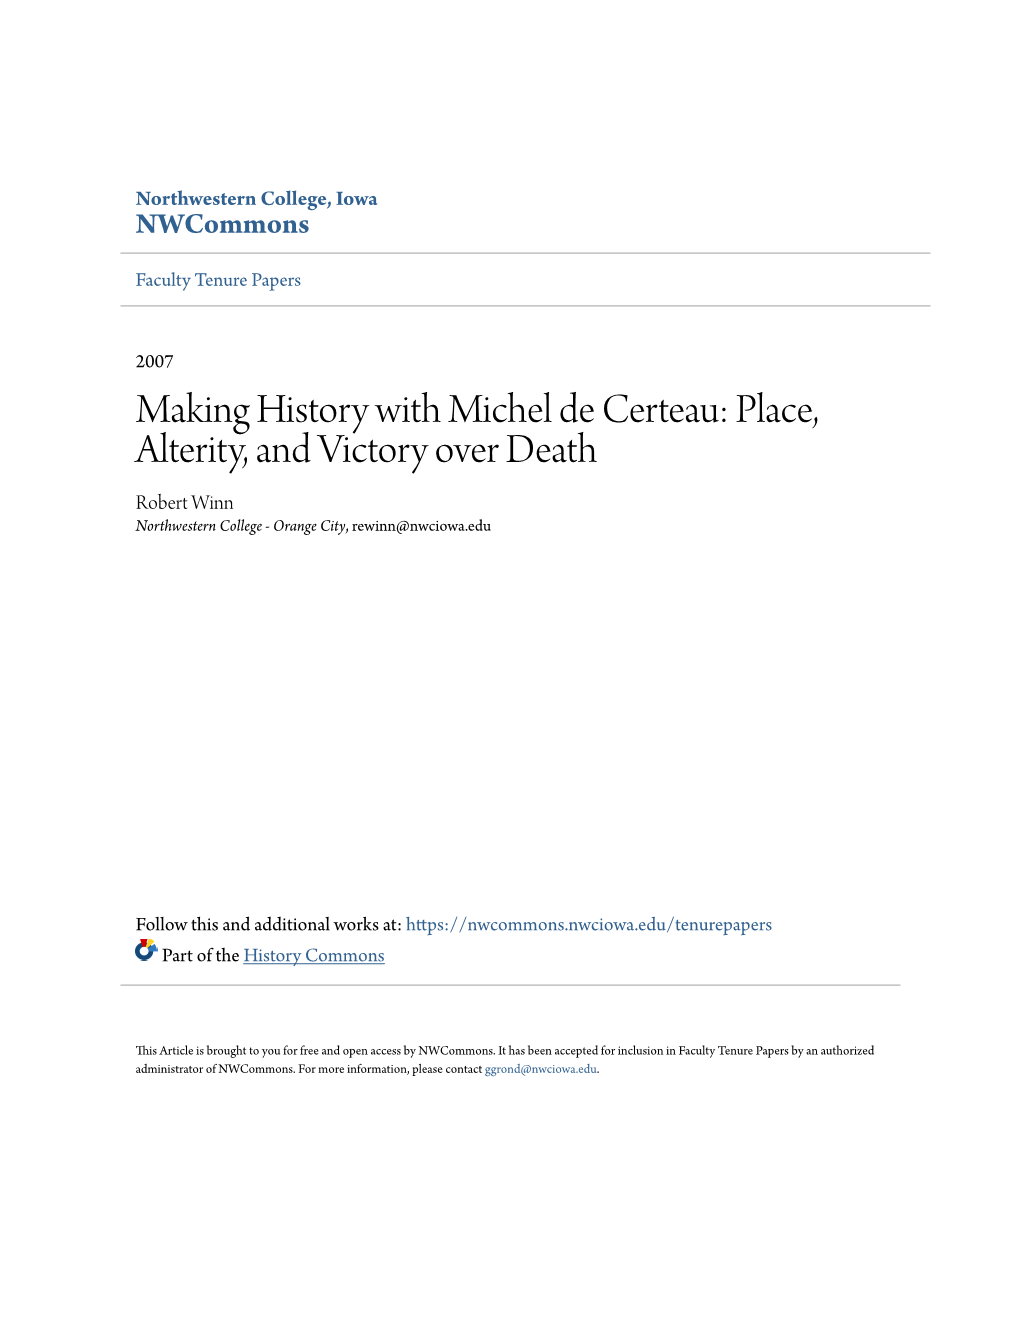 Making History with Michel De Certeau: Place, Alterity, and Victory Over Death Robert Winn Northwestern College - Orange City, Rewinn@Nwciowa.Edu